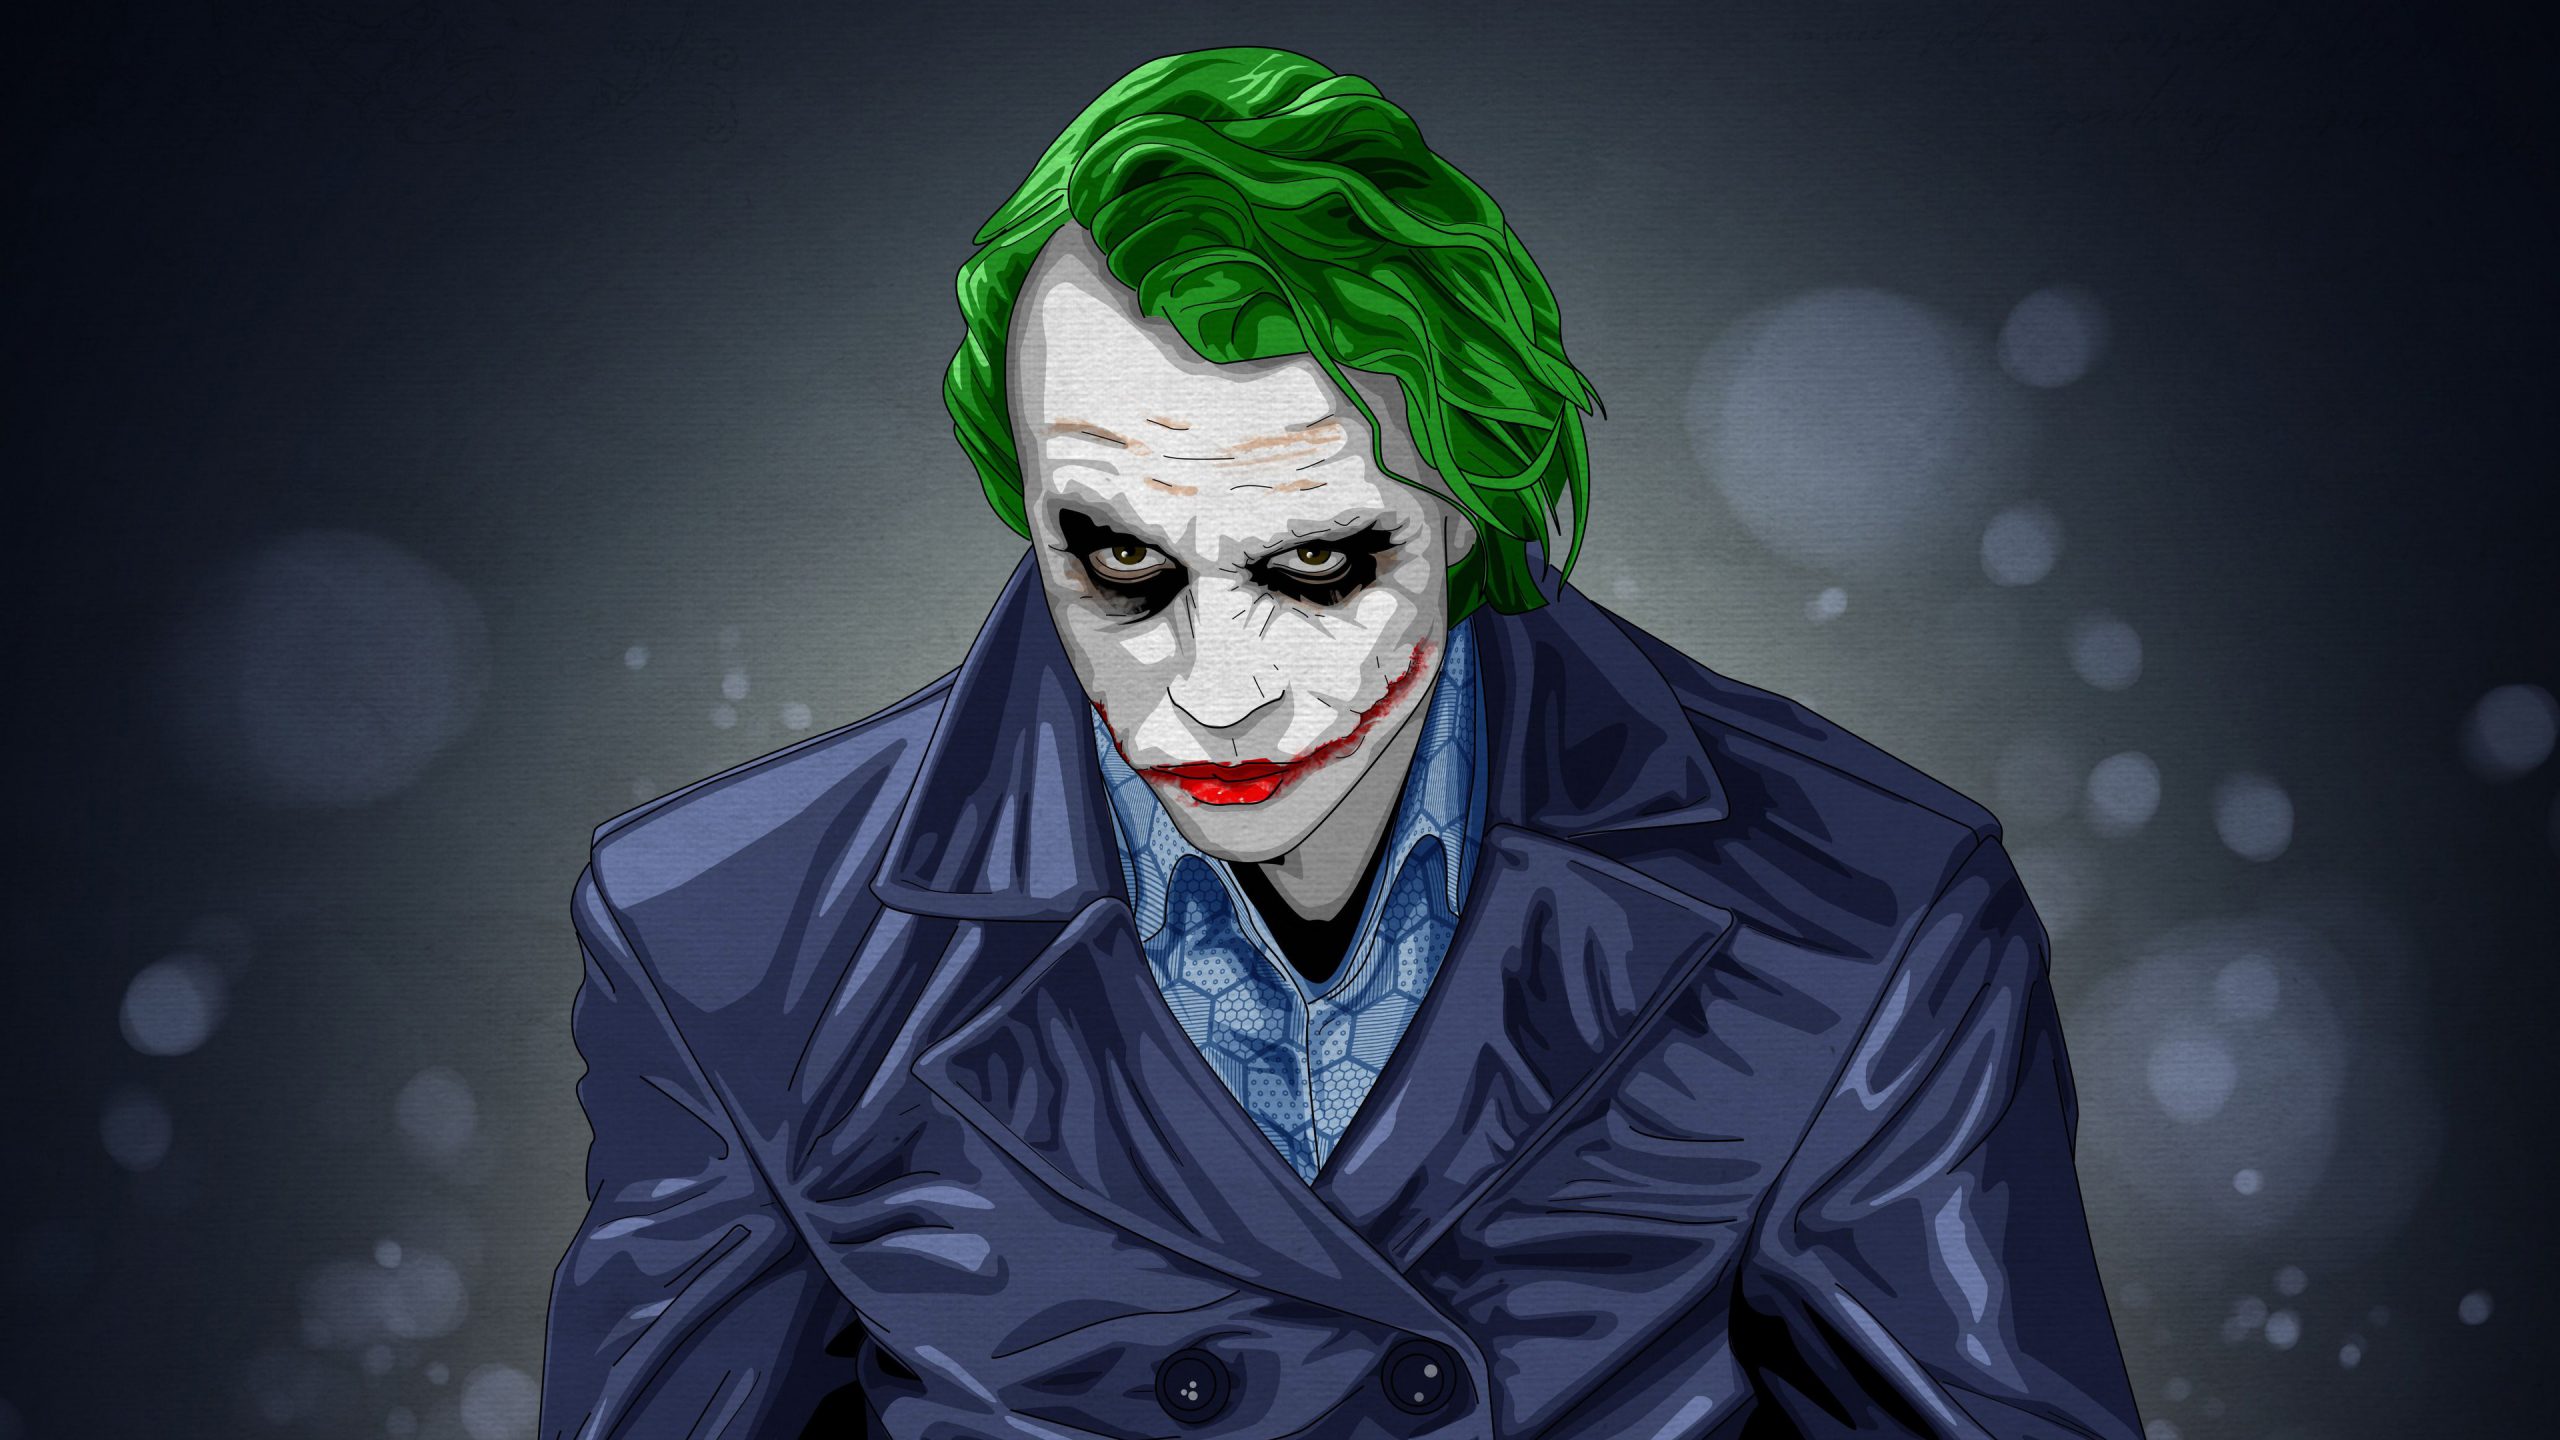 Hình nền Joker ngầu